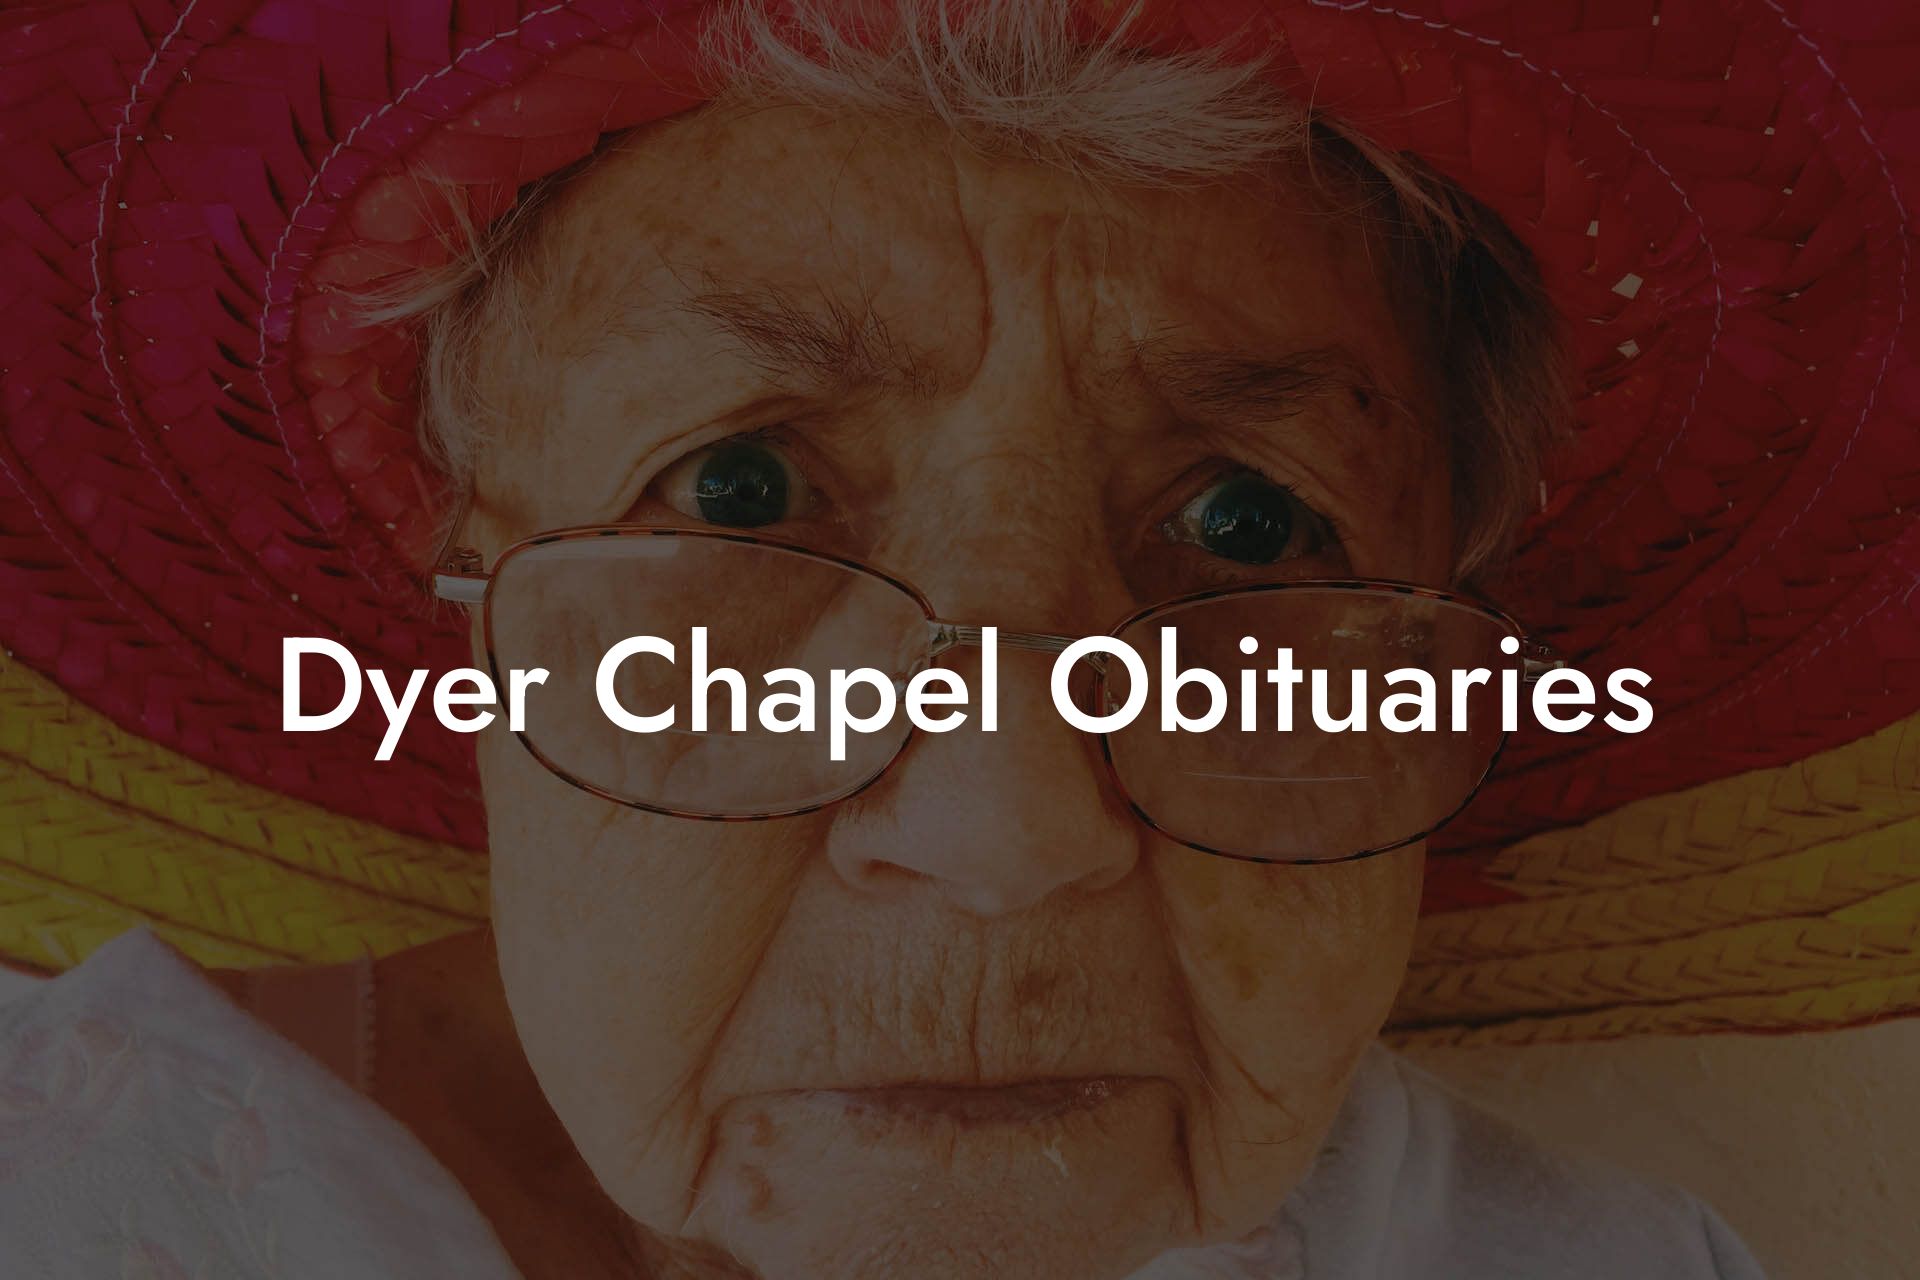 Dyer Chapel Obituaries